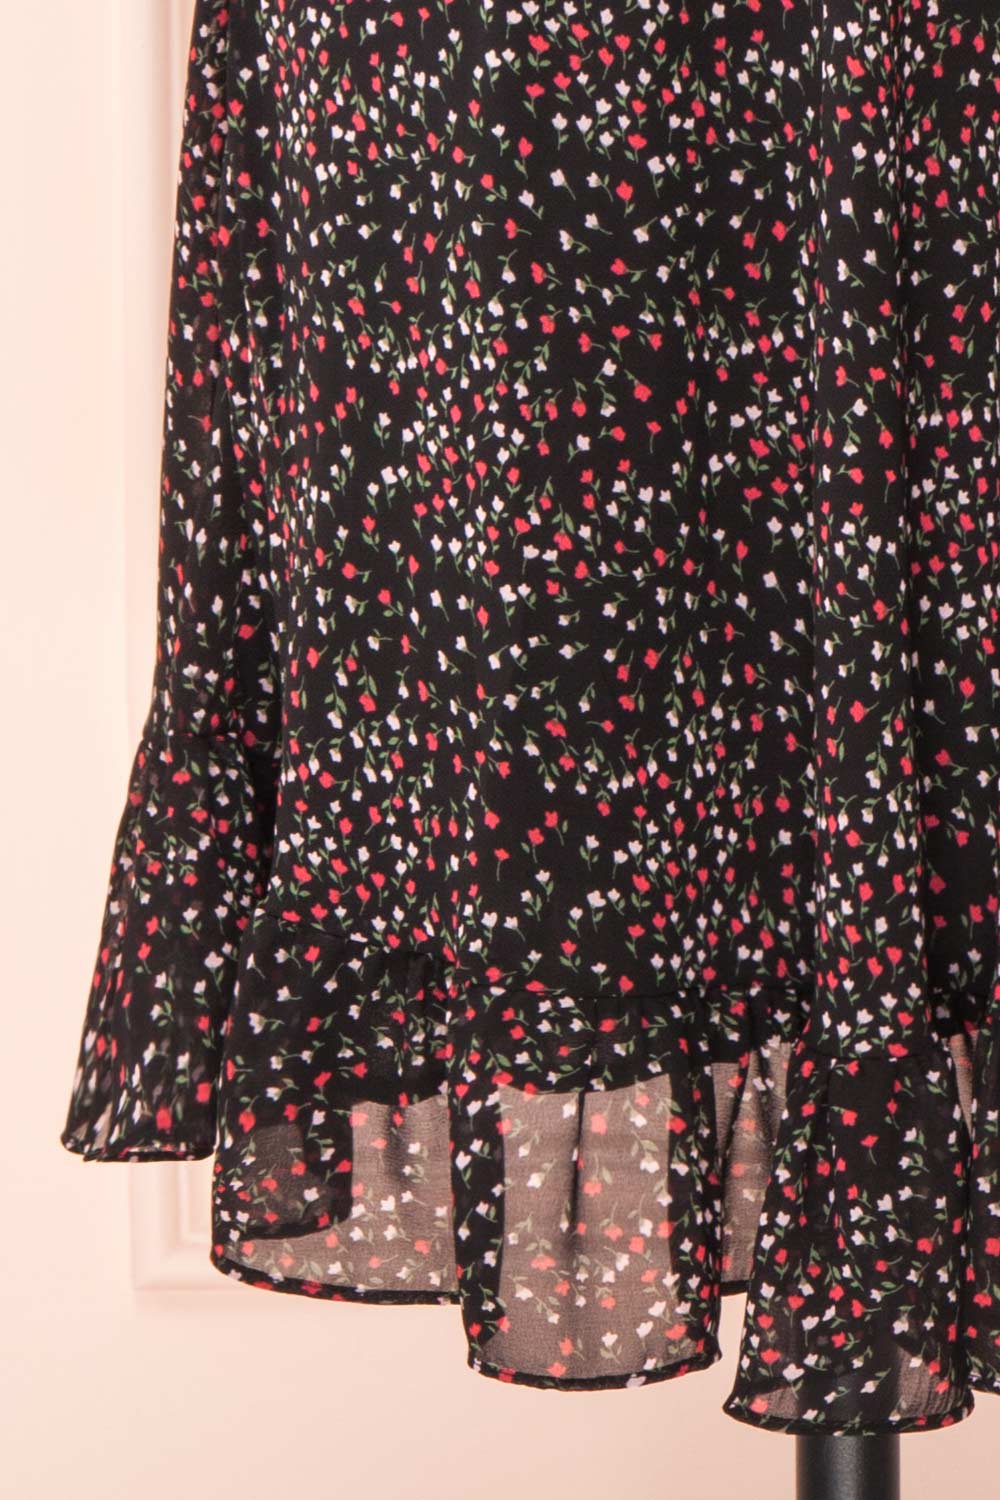 Milly Black Short Chiffon Dress w/ Puffy Sleeves | Boutique 1861 bottom 